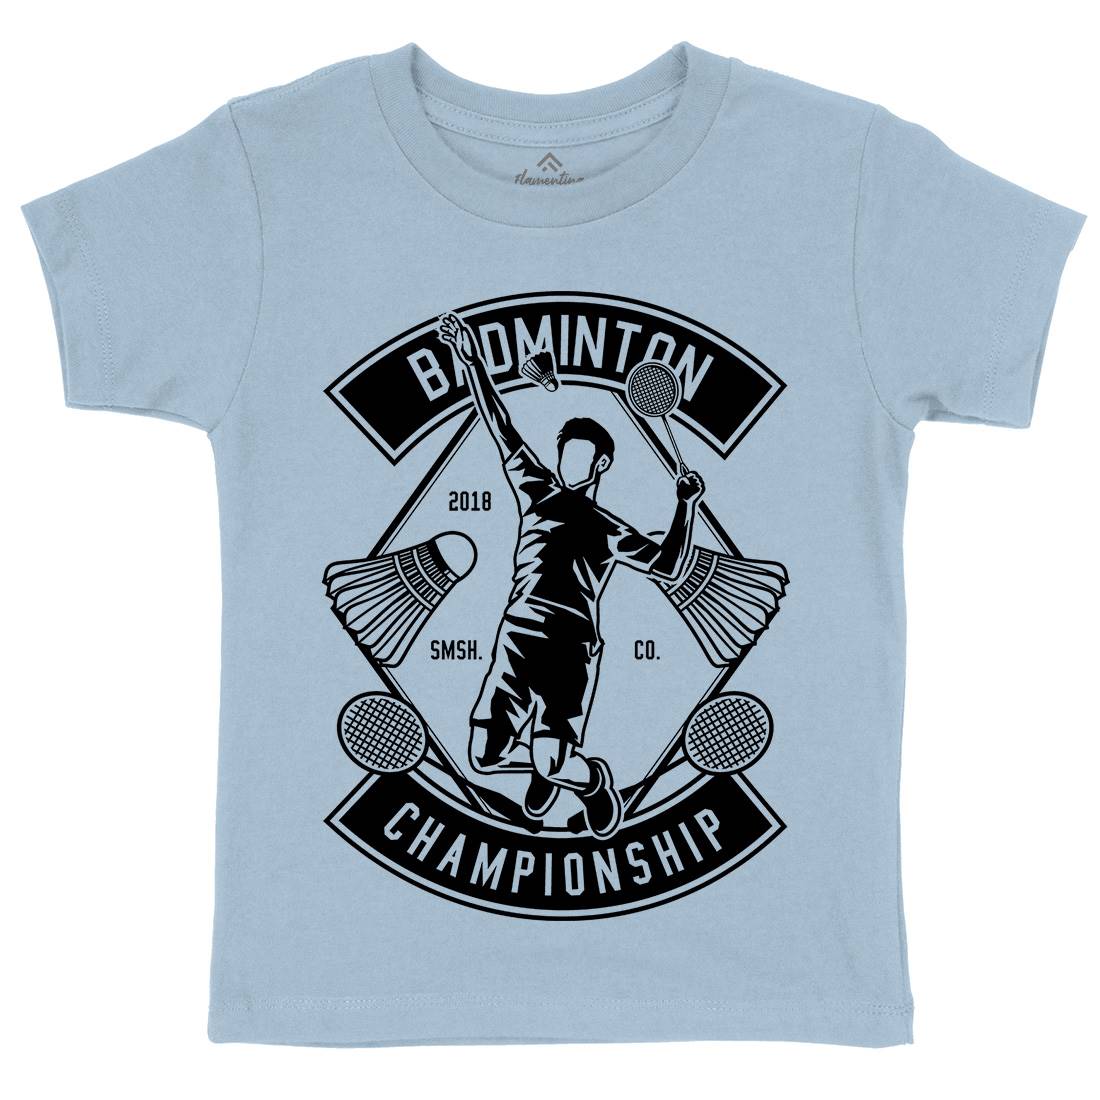 Badminton Championship Kids Crew Neck T-Shirt Sport B486